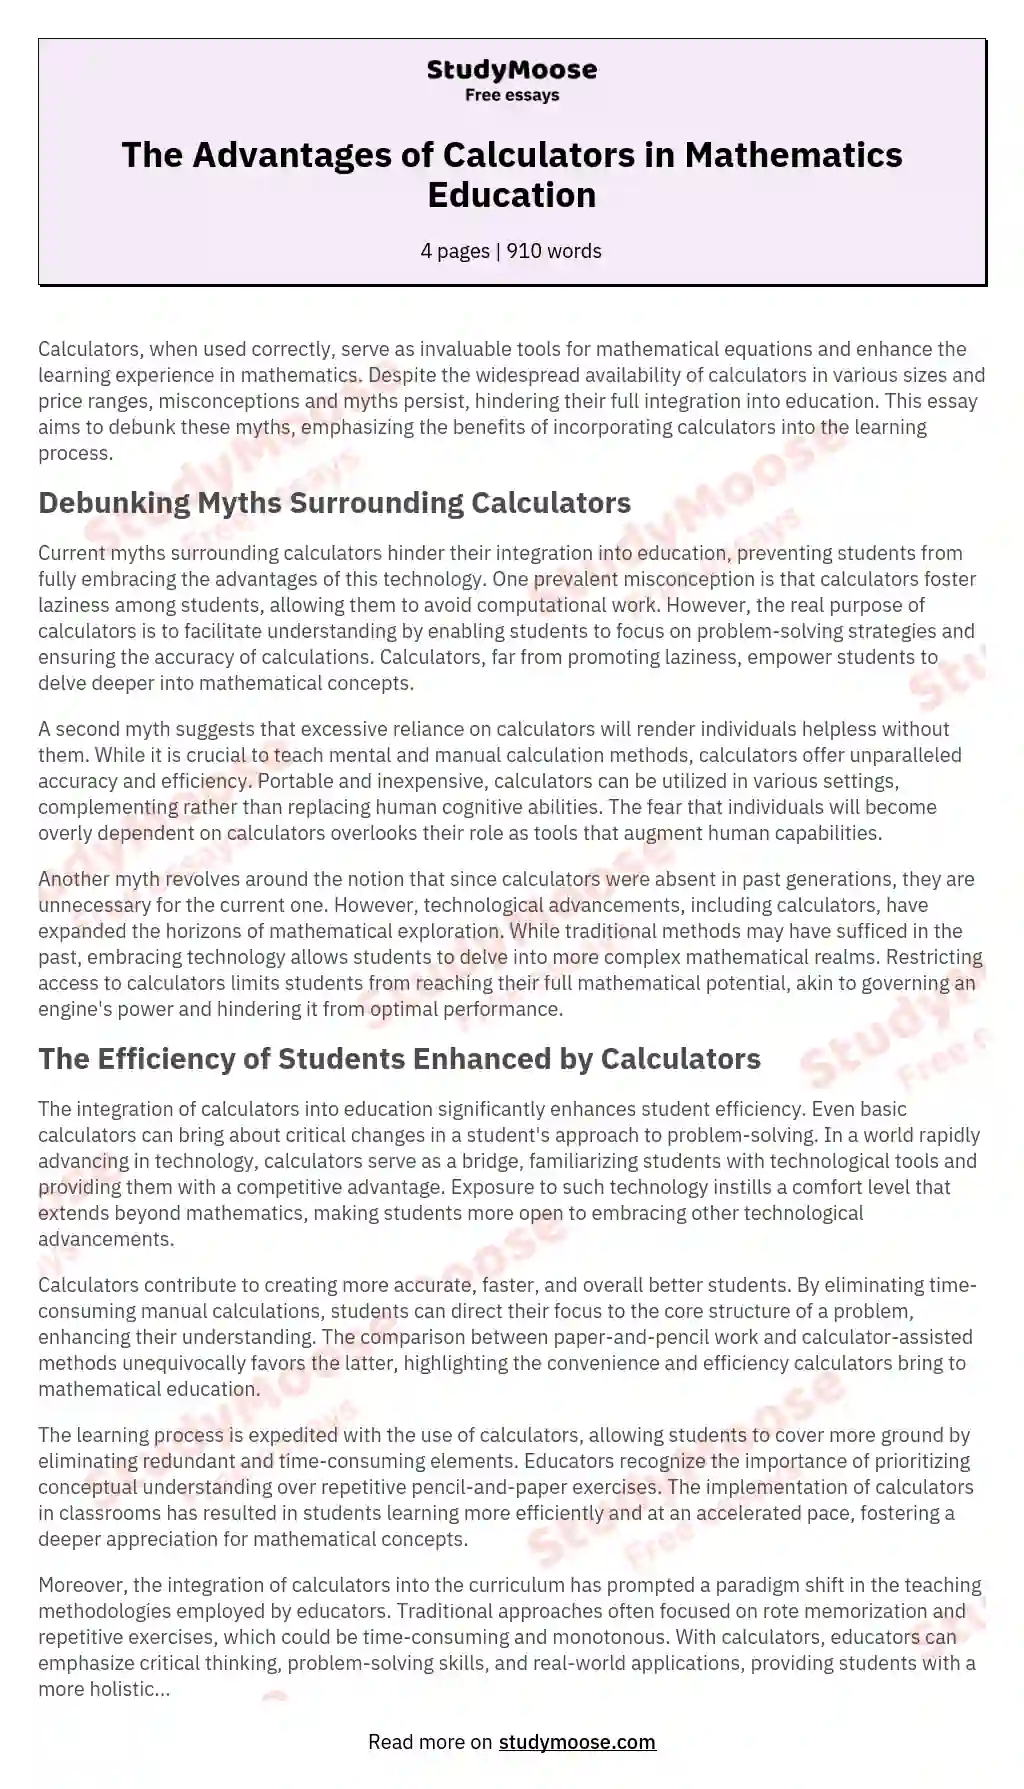 The Advantages of Calculators in Mathematics Education essay